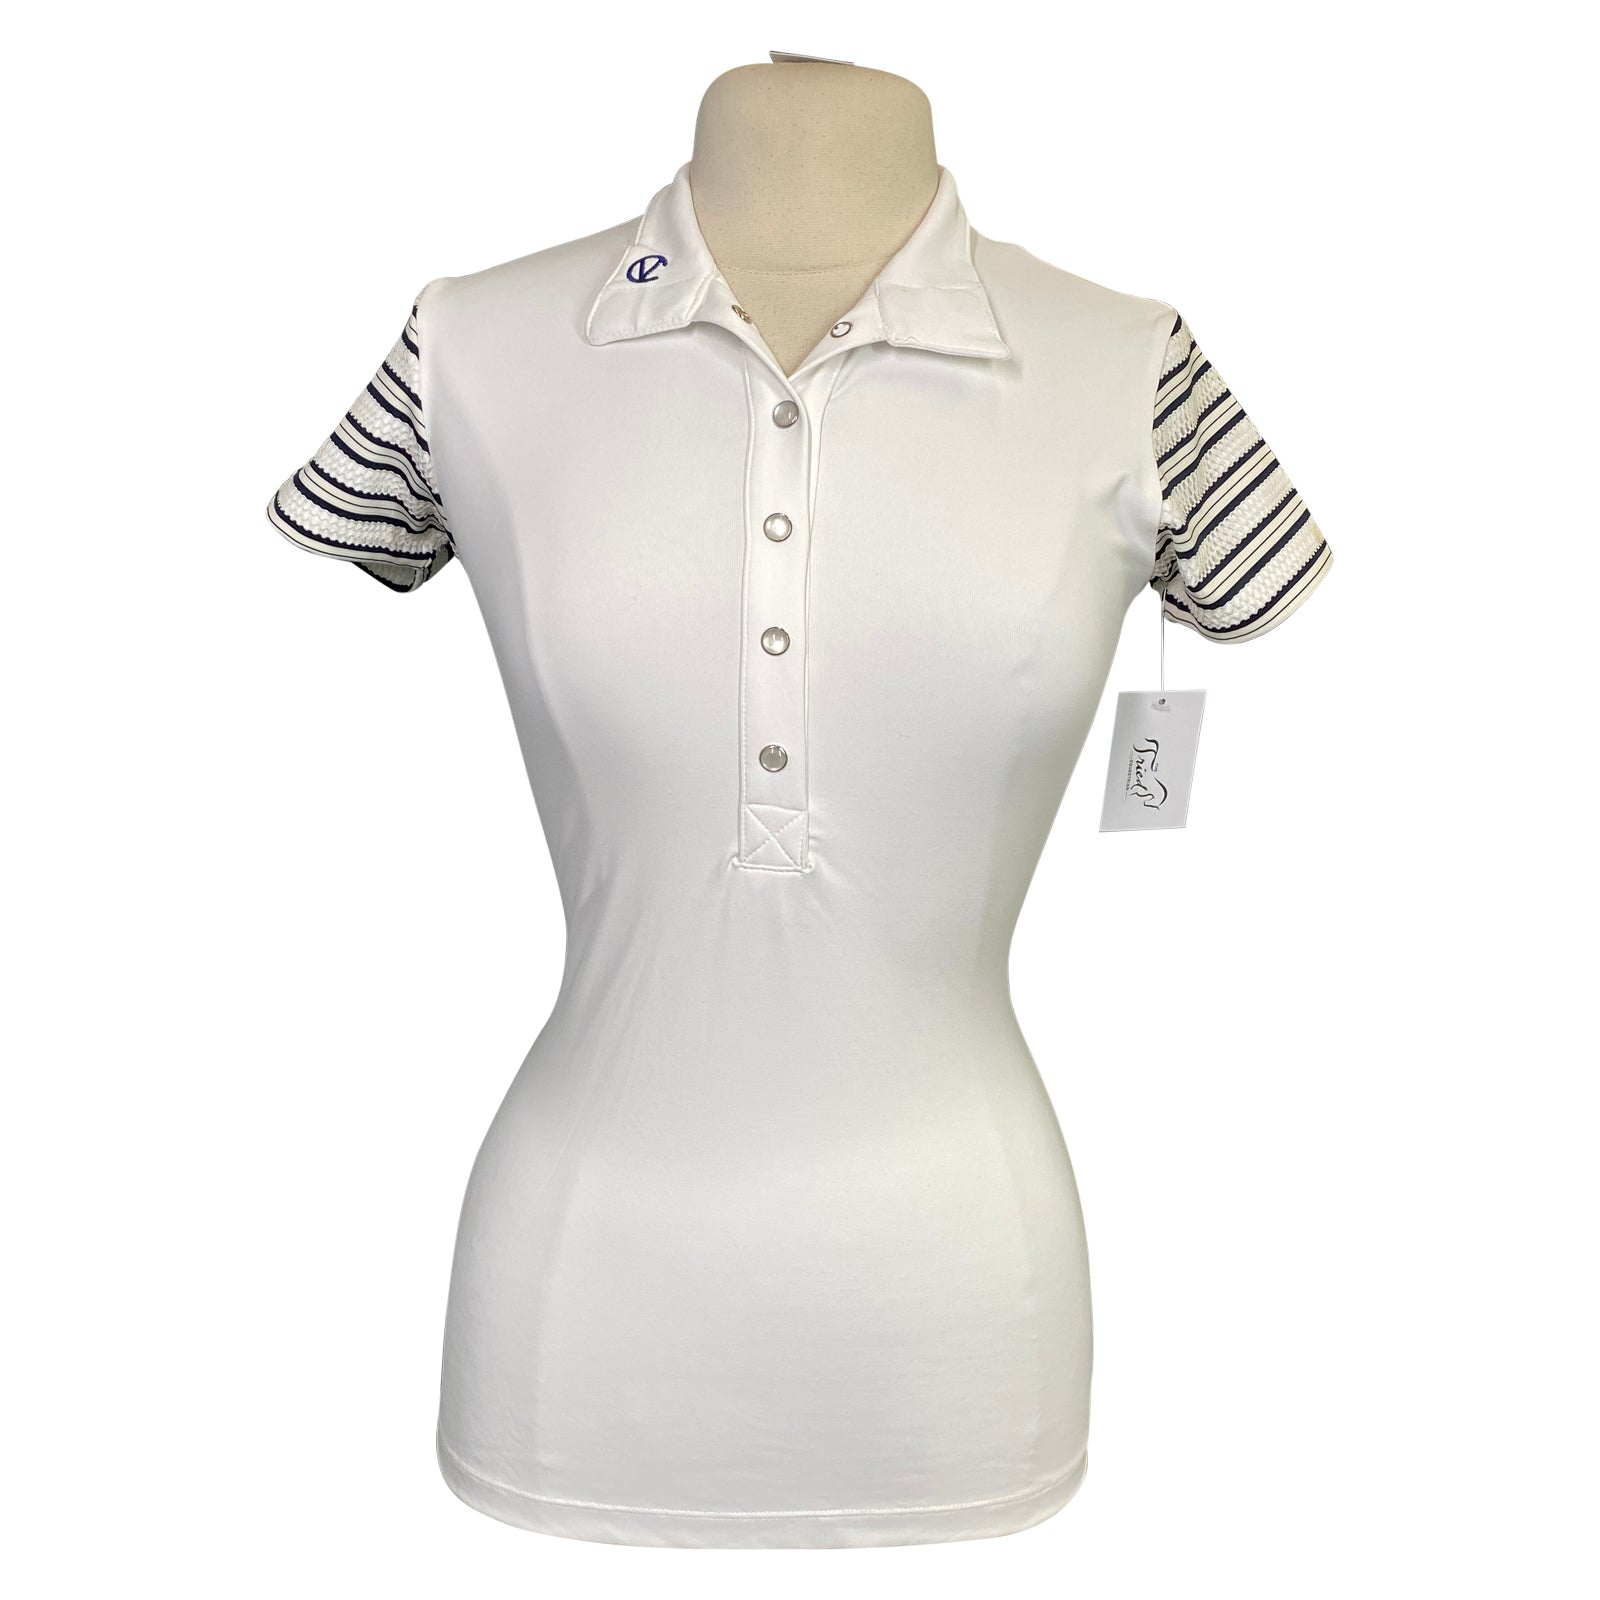 Calverro &#39;Short Stripe&#39; Competition Shirt in White